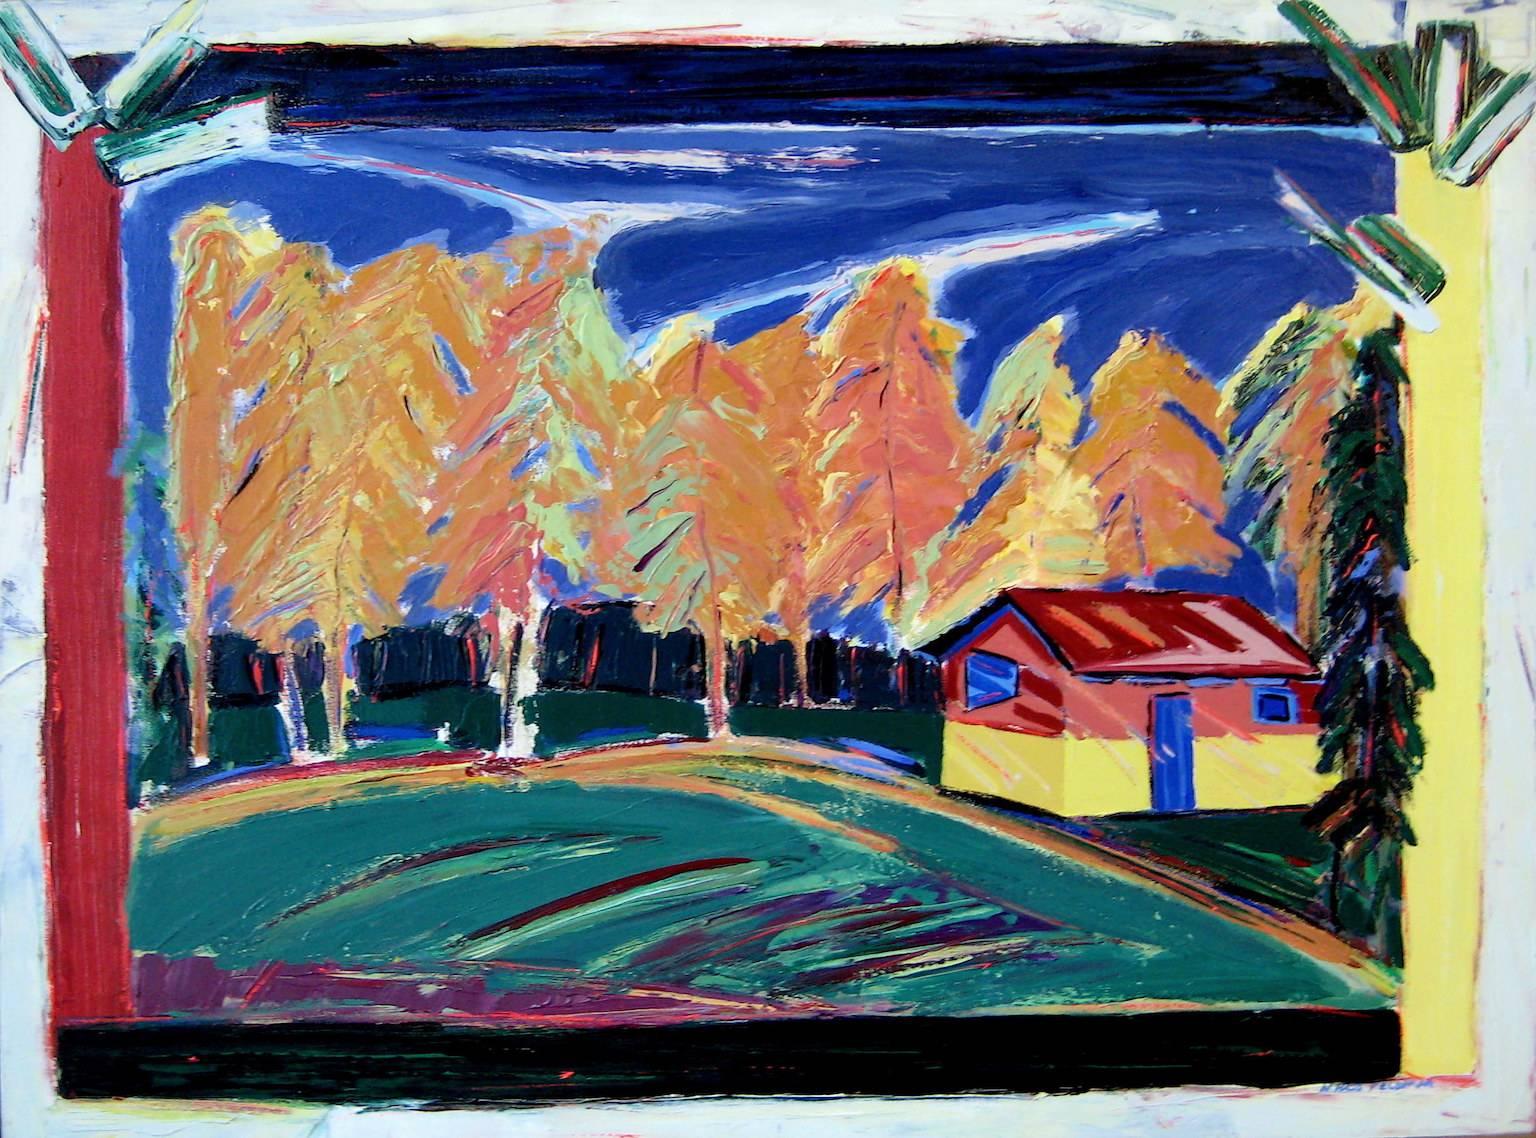 "Cabin in the Woods", Landschaft, Bäume, Felder, Rottöne, Blautöne, Acrylmalerei